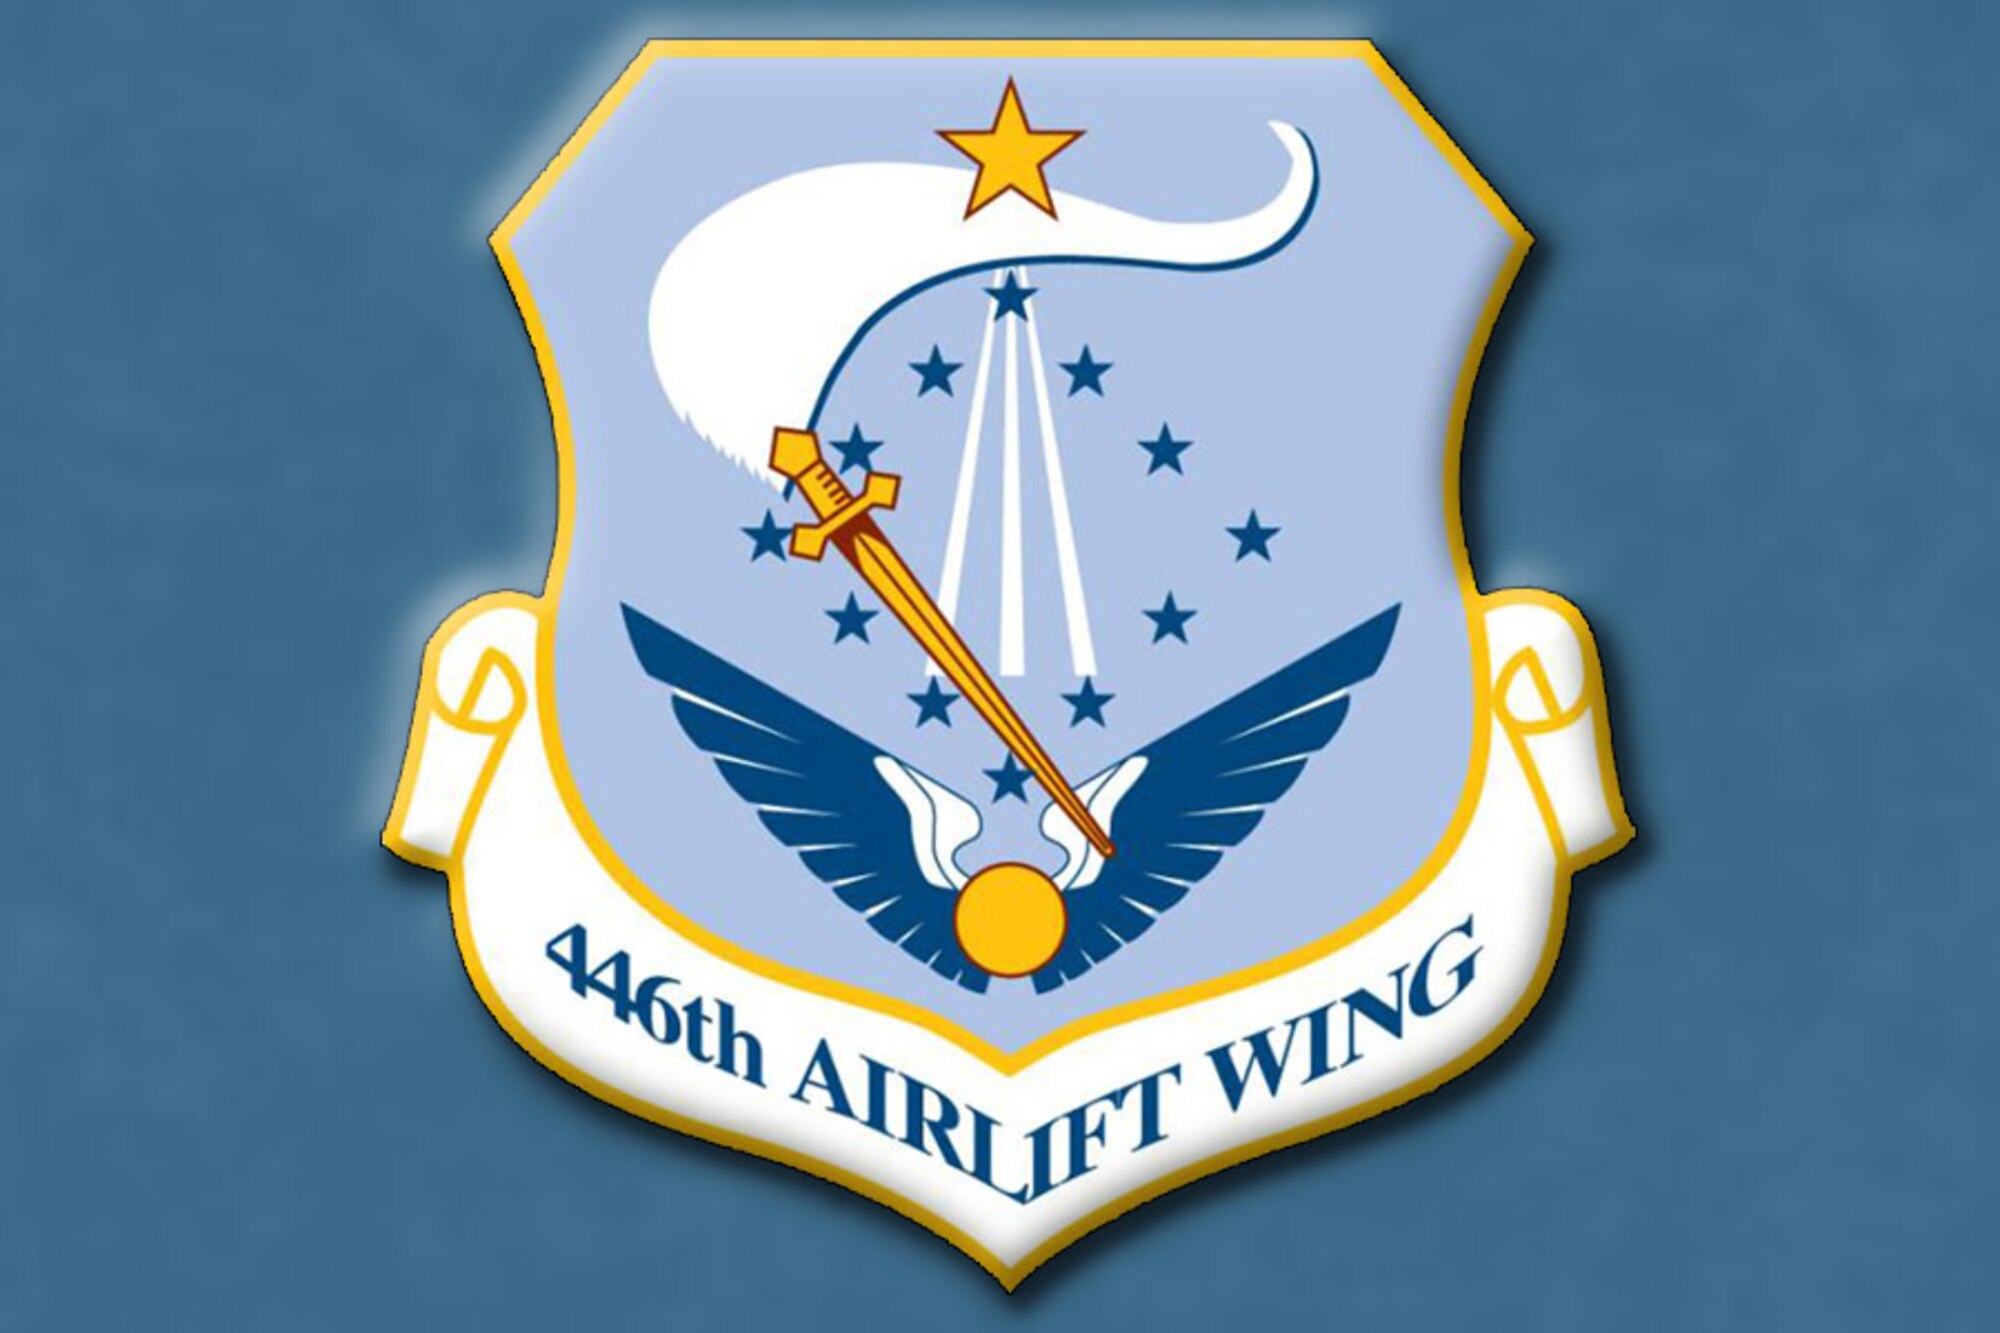 446 Airlift Wing unit crest